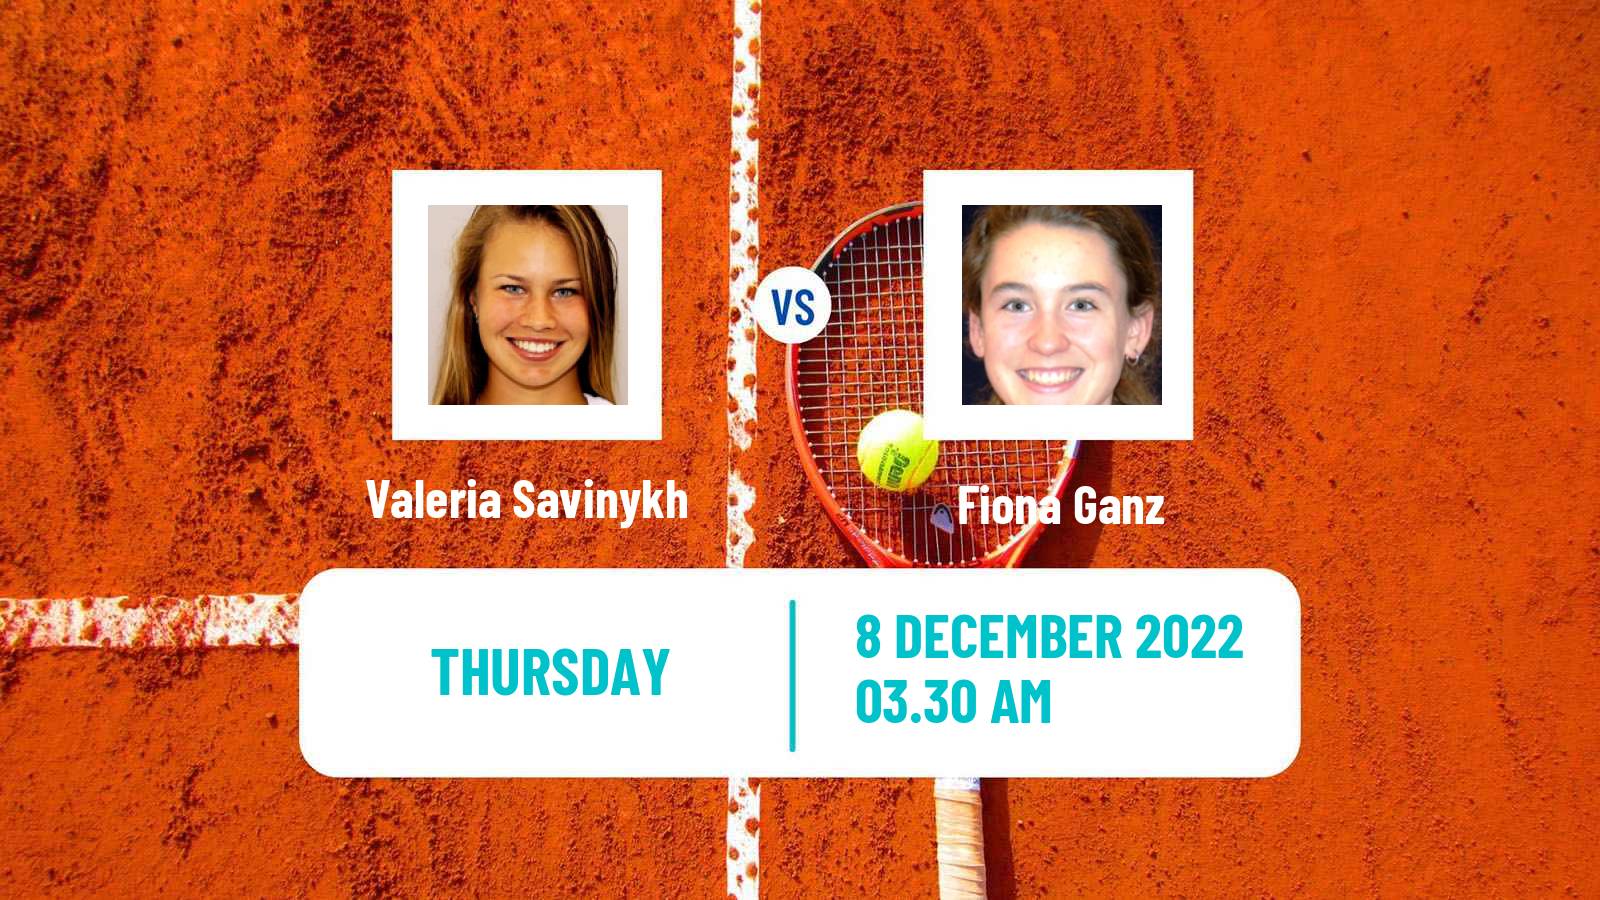 Tennis ITF Tournaments Valeria Savinykh - Fiona Ganz